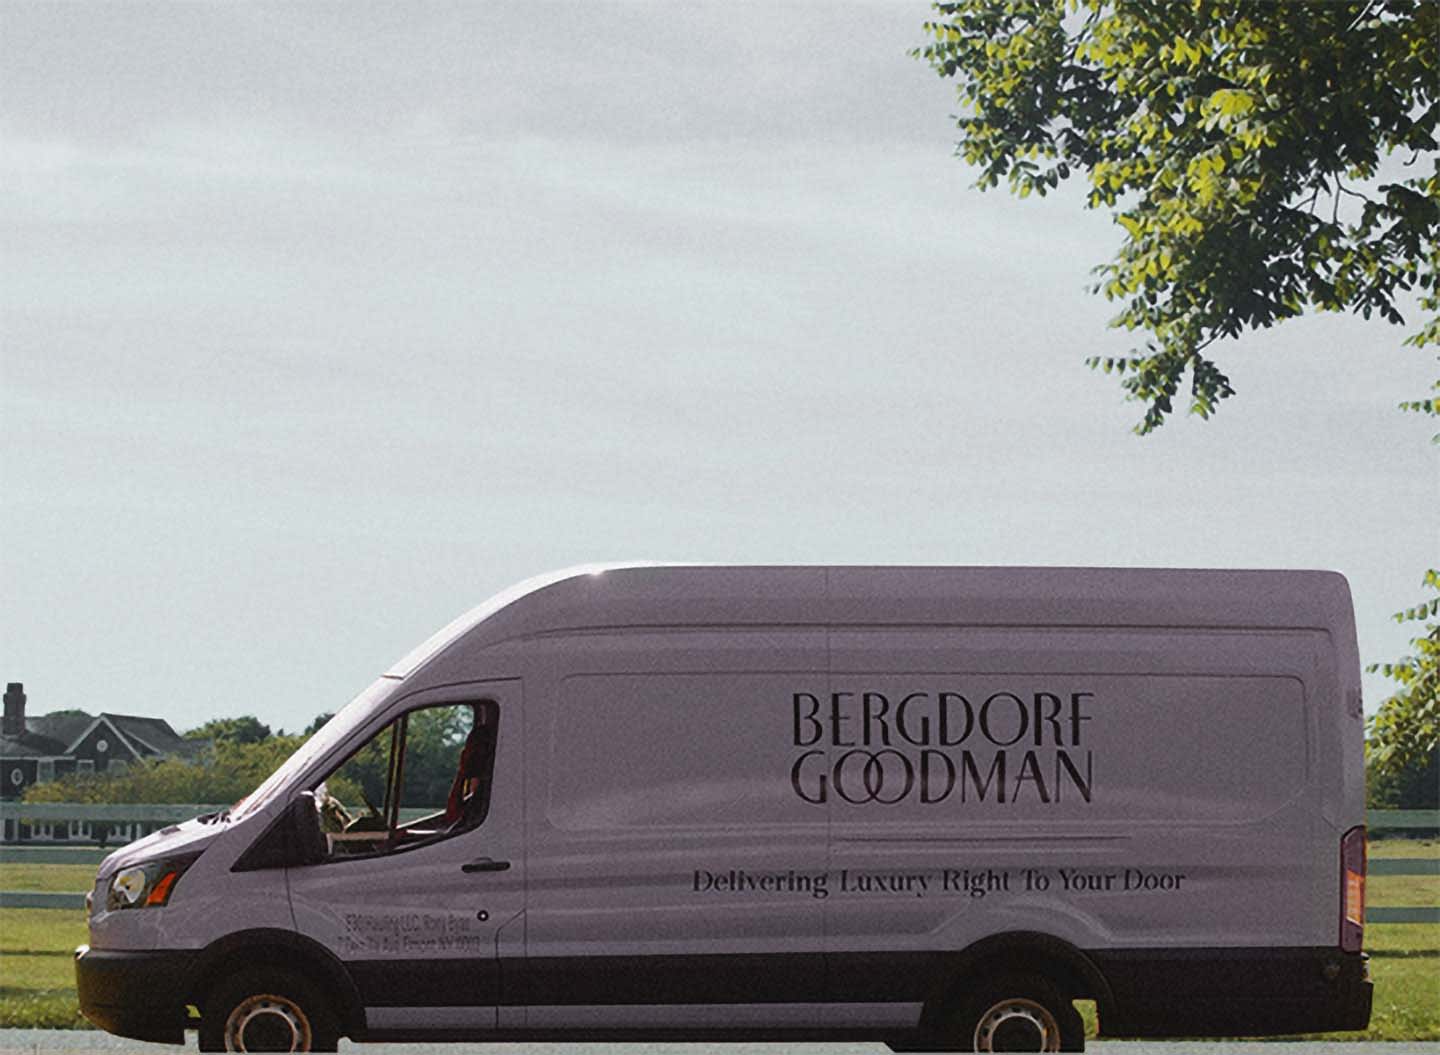 Visit The Store at Bergdorf Goodman